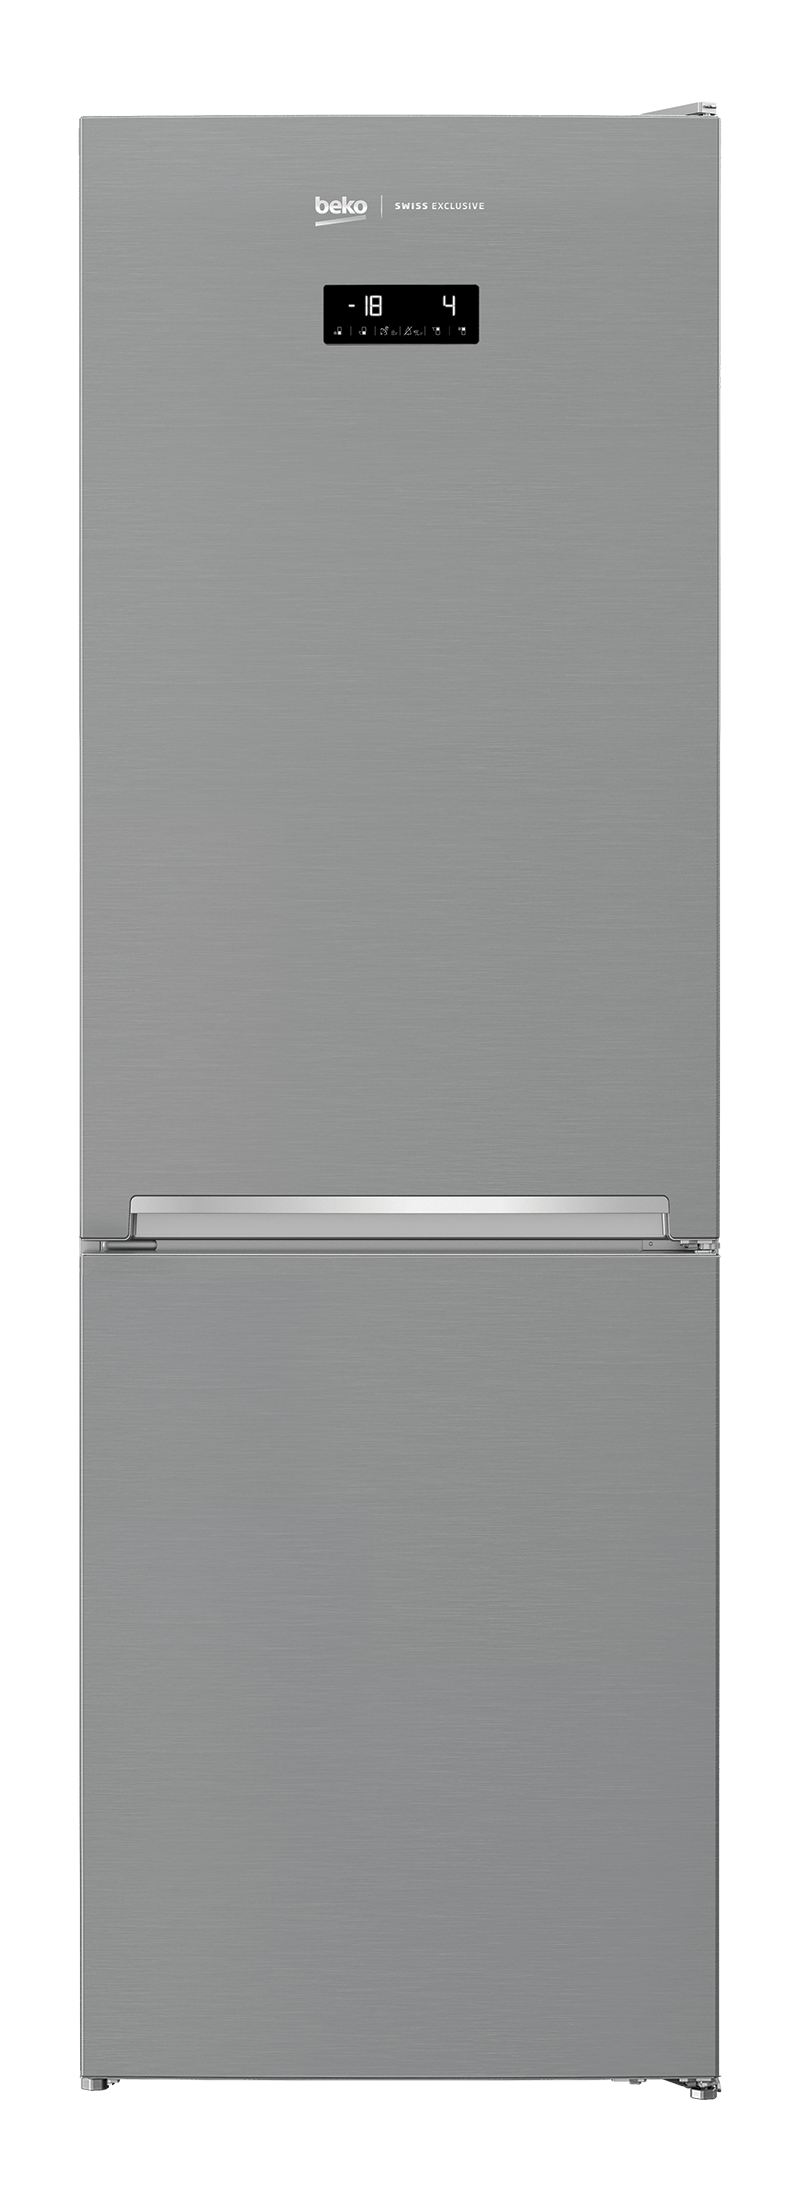 BEKO KG710 - Combinazione frigorifero / congelatore (Attrezzo)